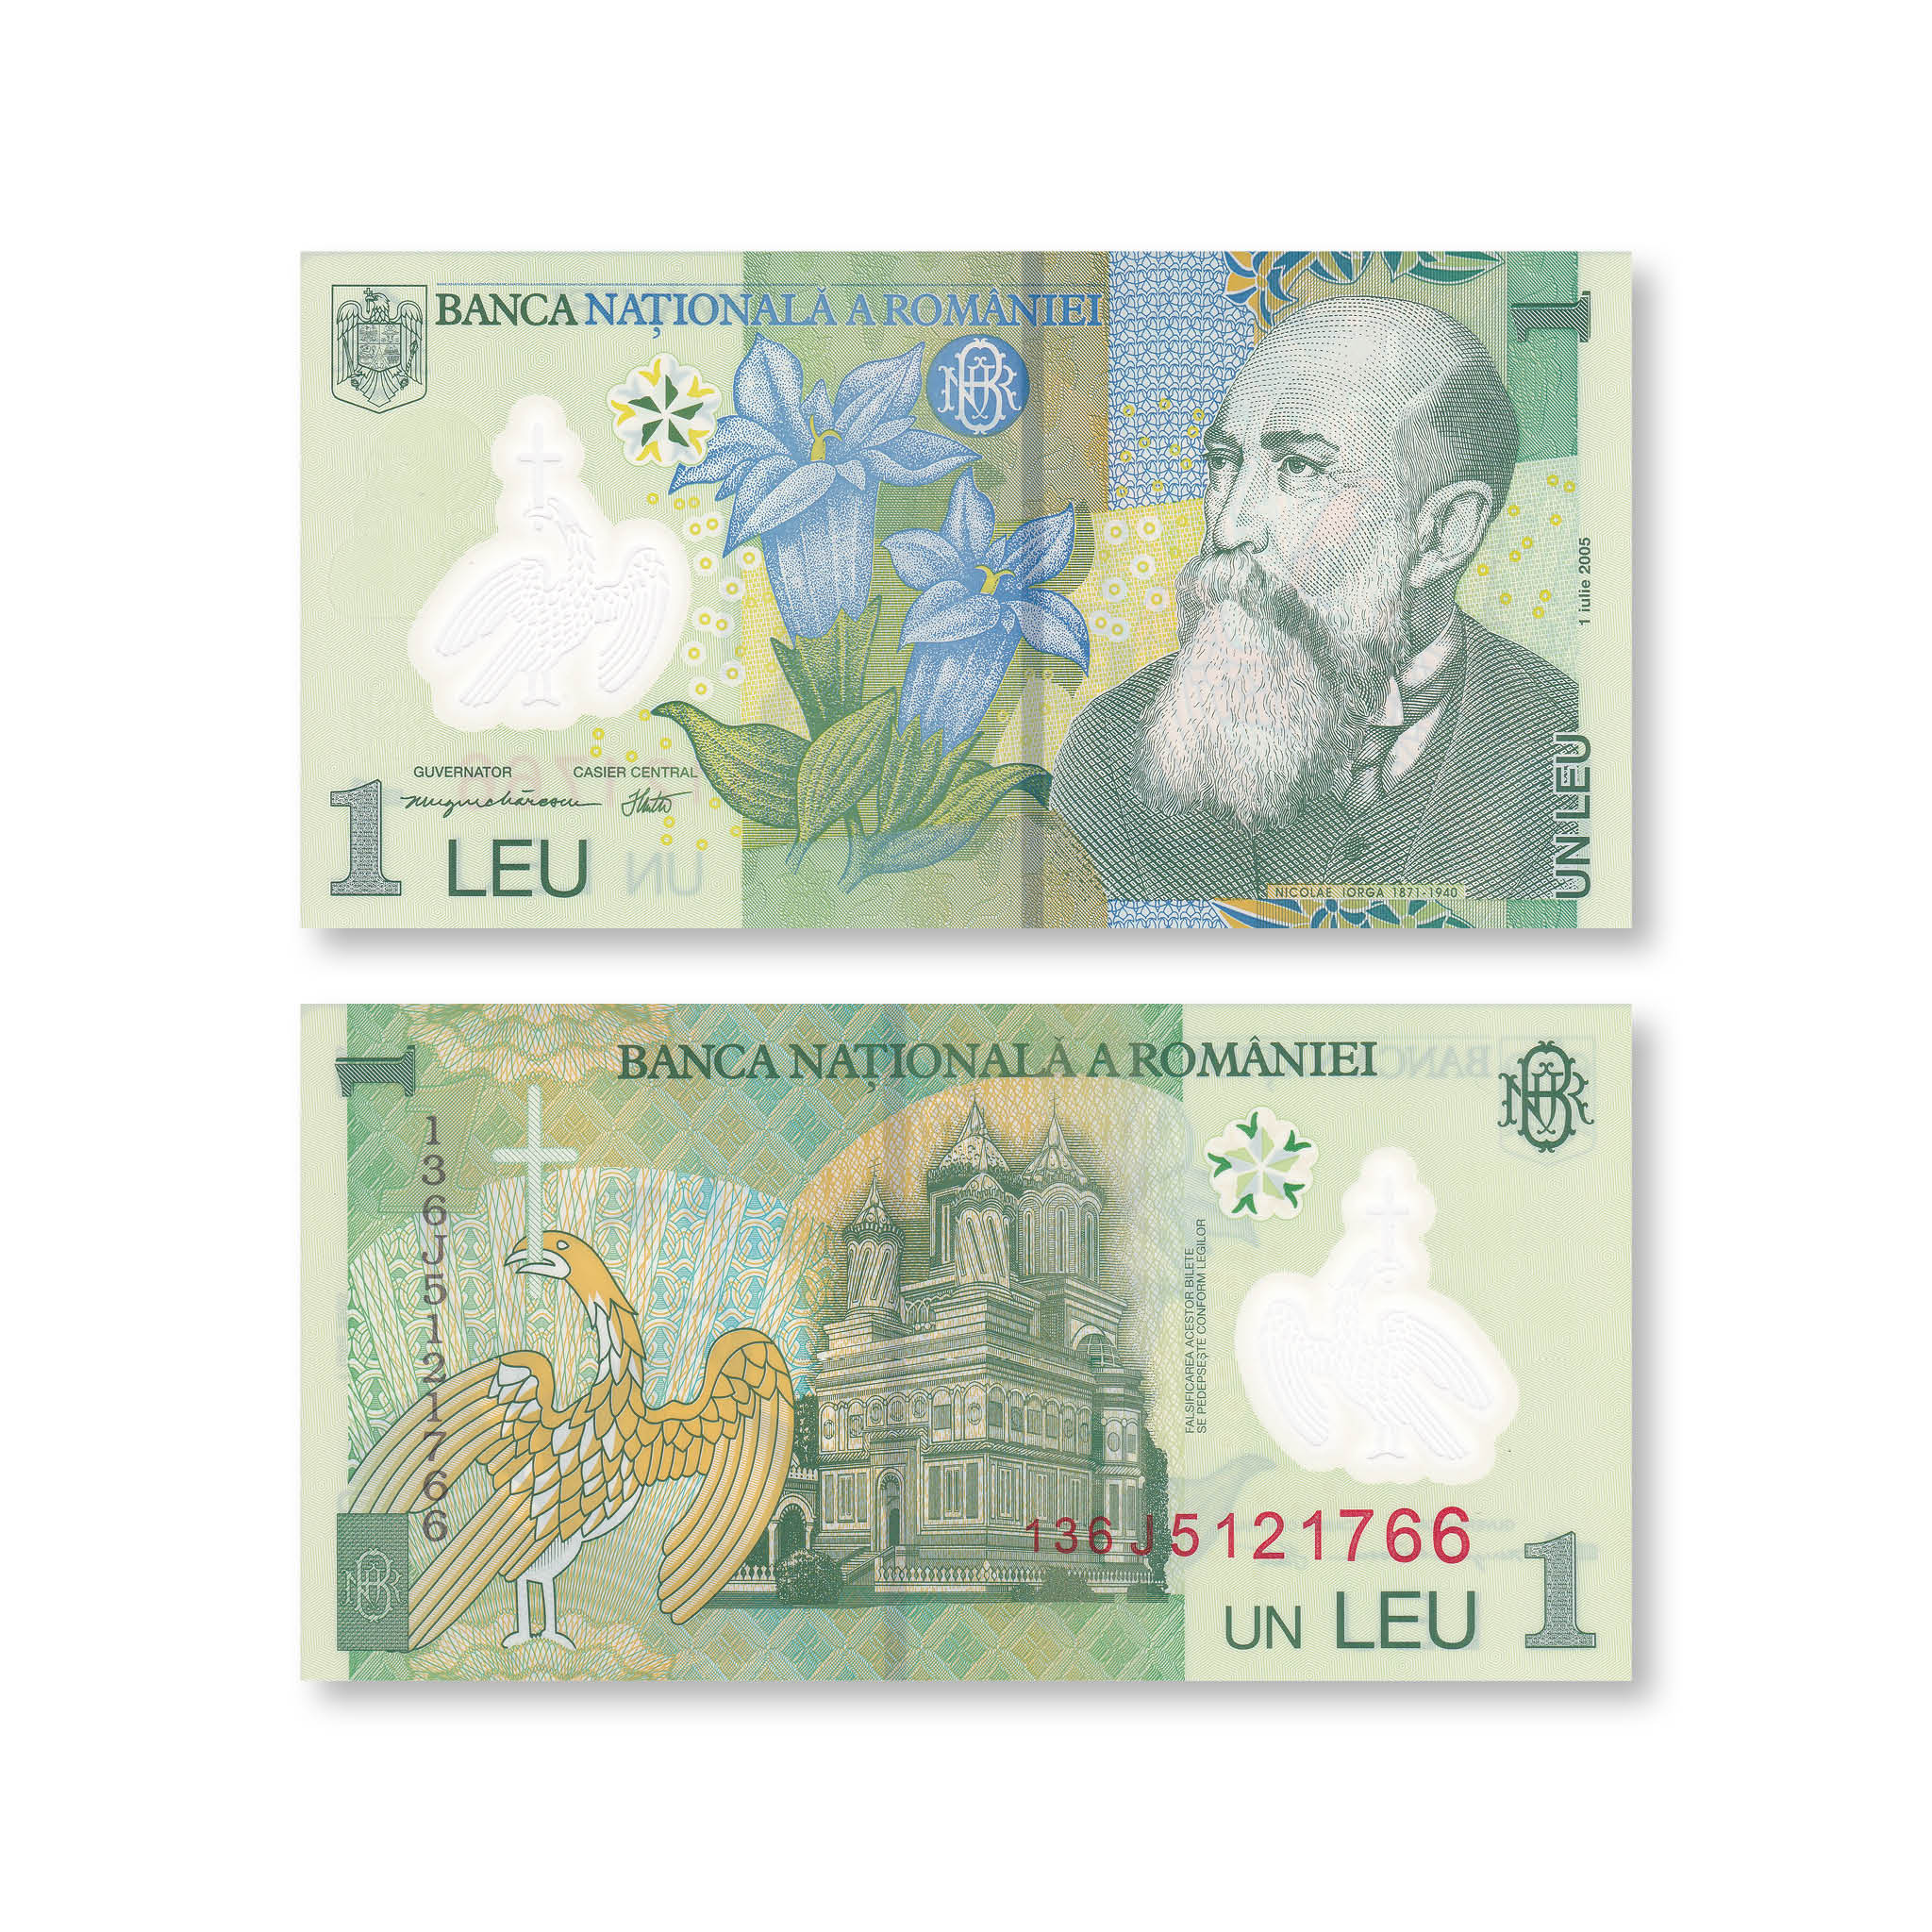 Romania 1 Leu, 2005 (2013), B278h, P117h, UNC - Robert's World Money - World Banknotes